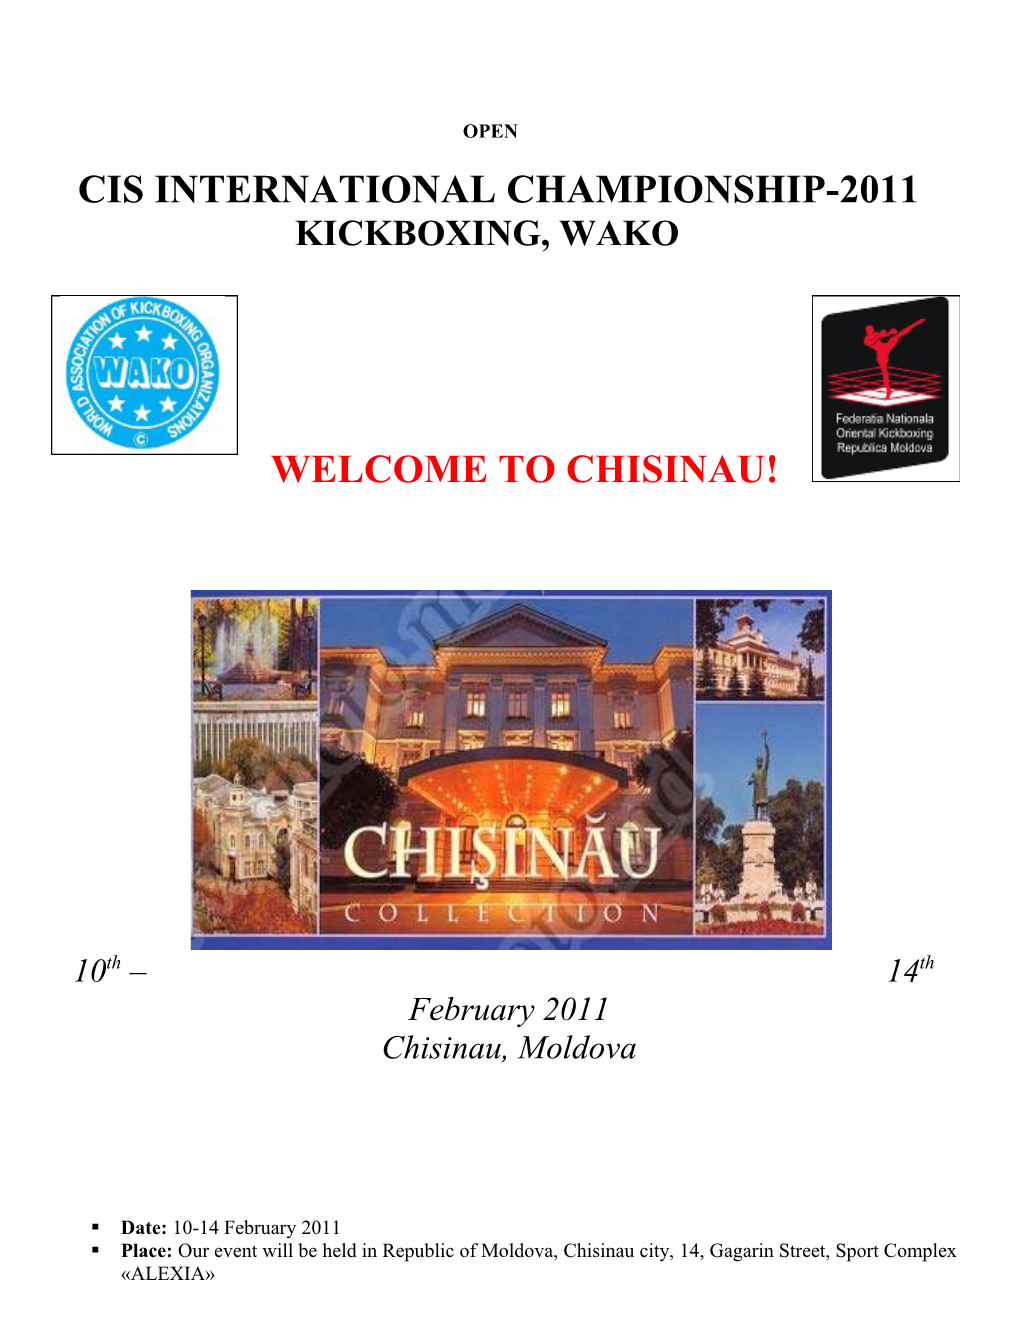 Cis Open Championship-2009